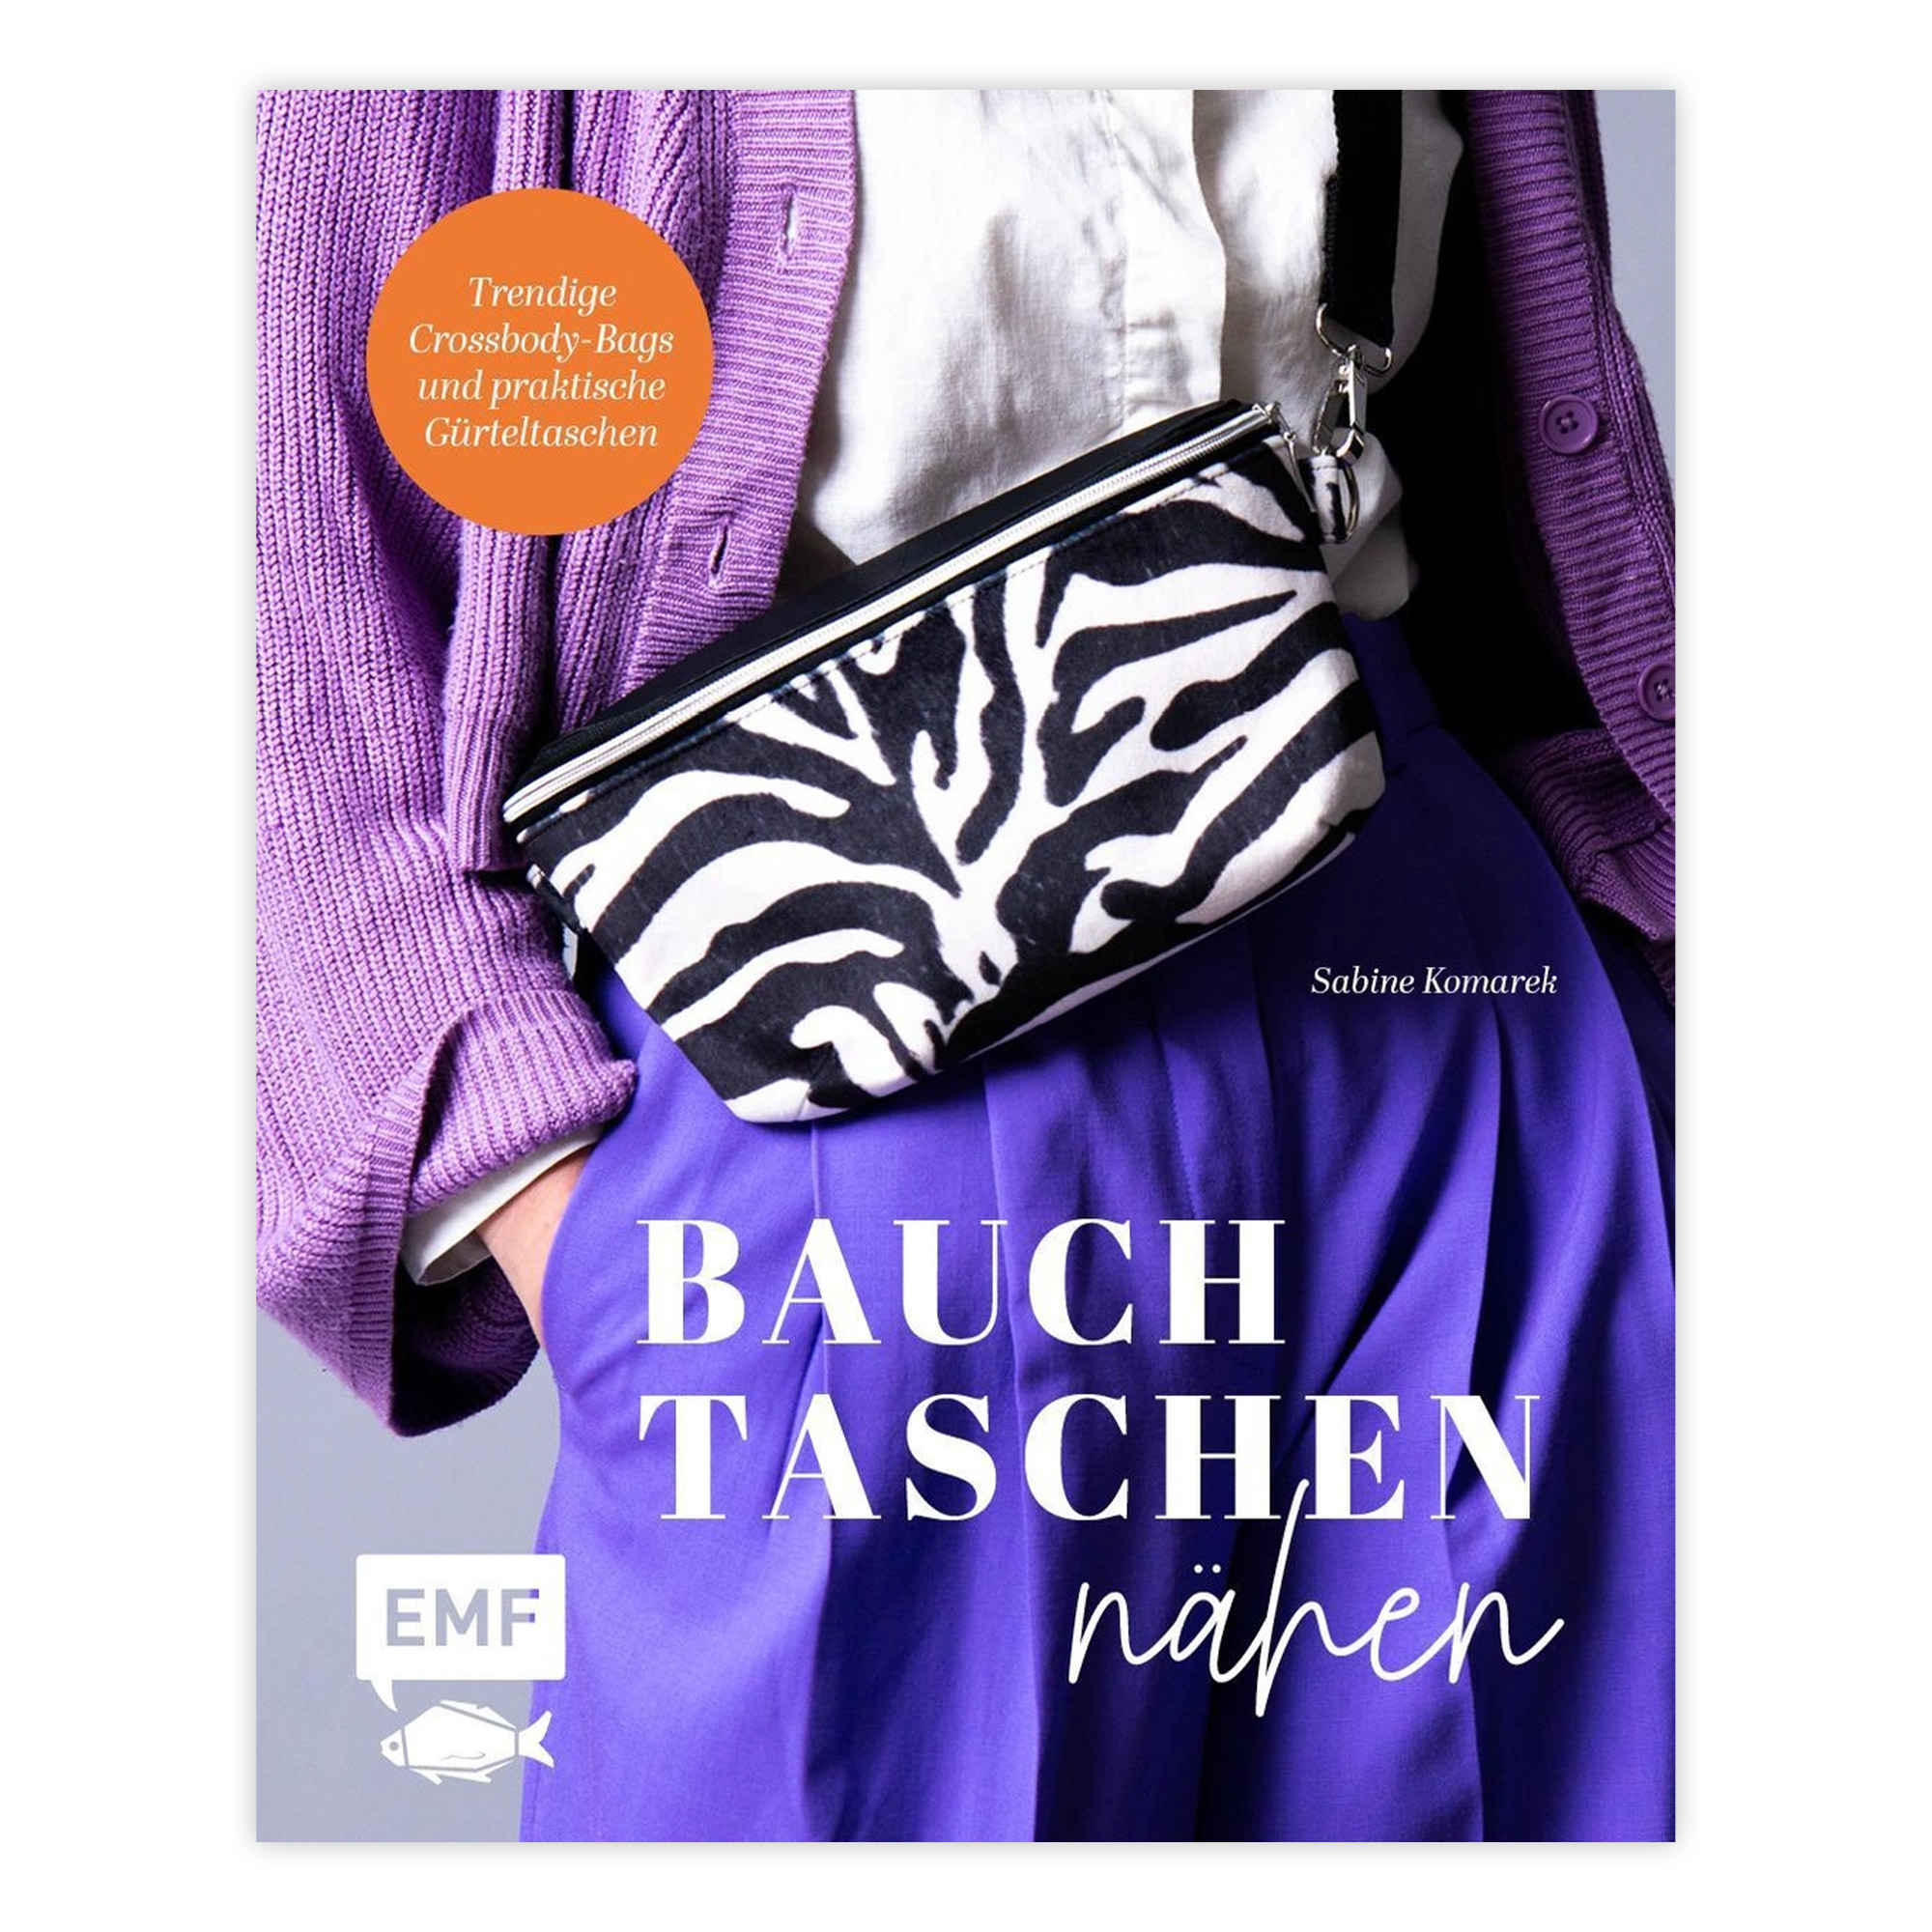 Livre - Bauchtaschen nähen de Sabine Komarek (allemand)